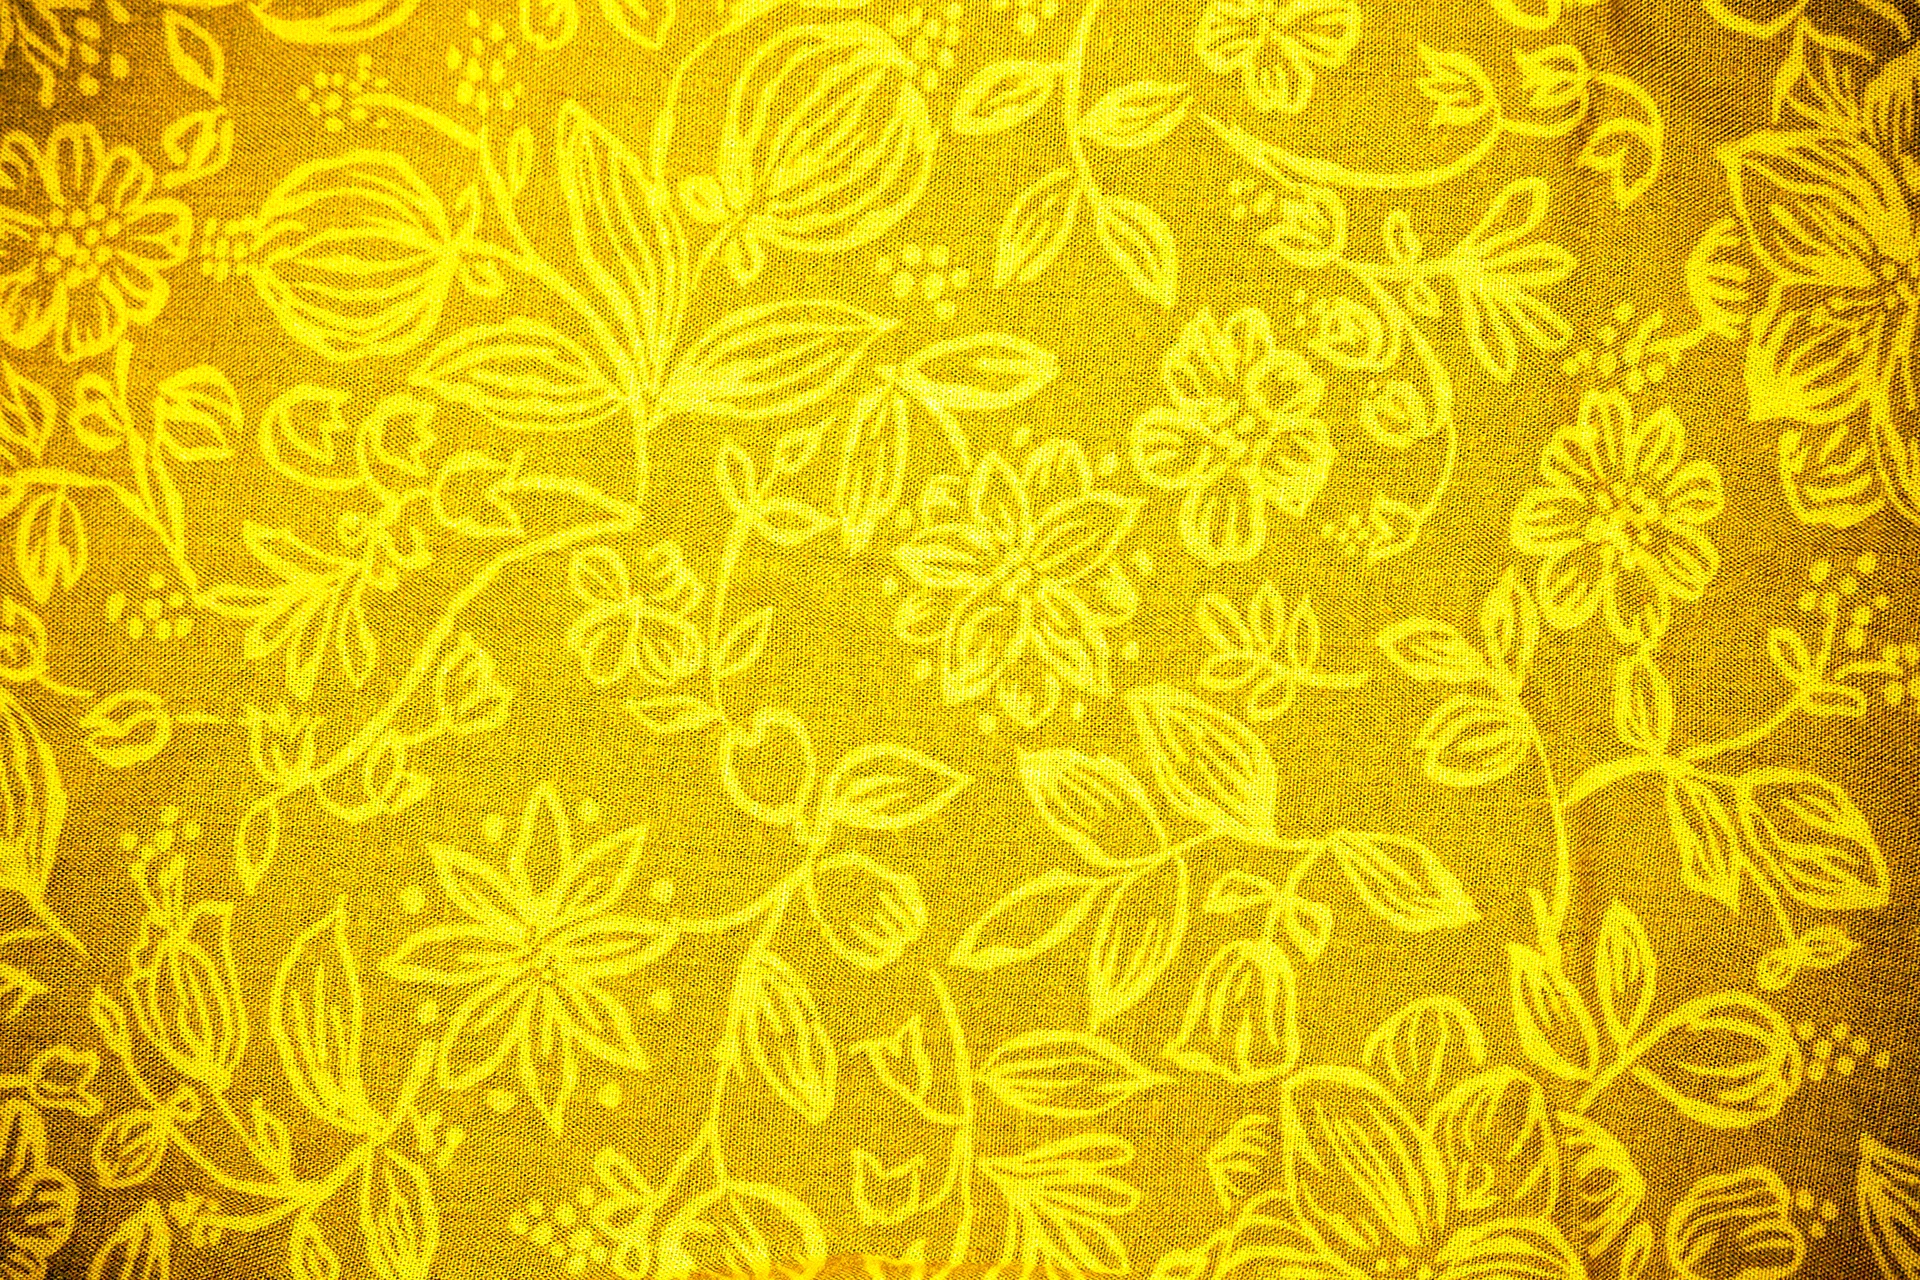 Yellow Pattern Wallpaper